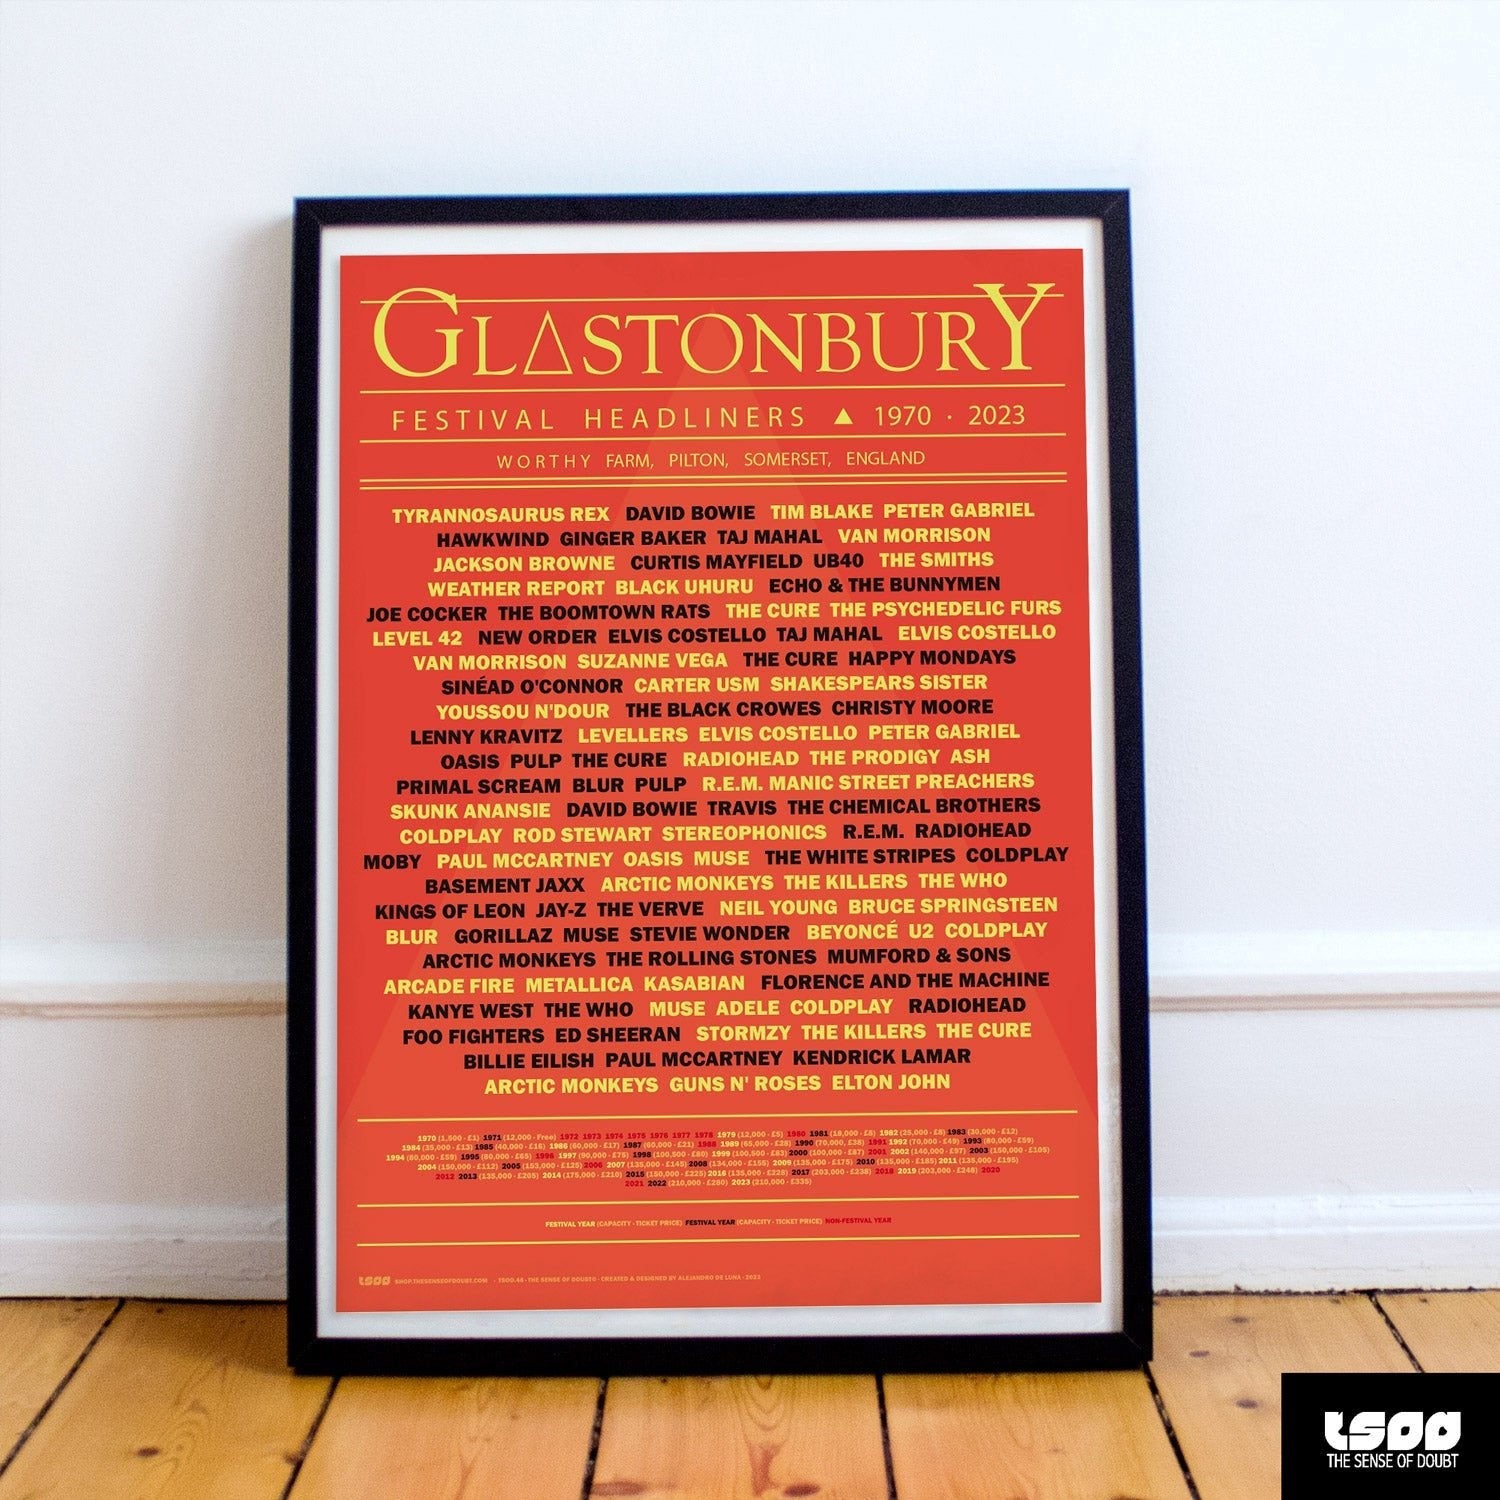 Glastonbury Festival Headliners (1970 - 2023) - The Sense of Doubt